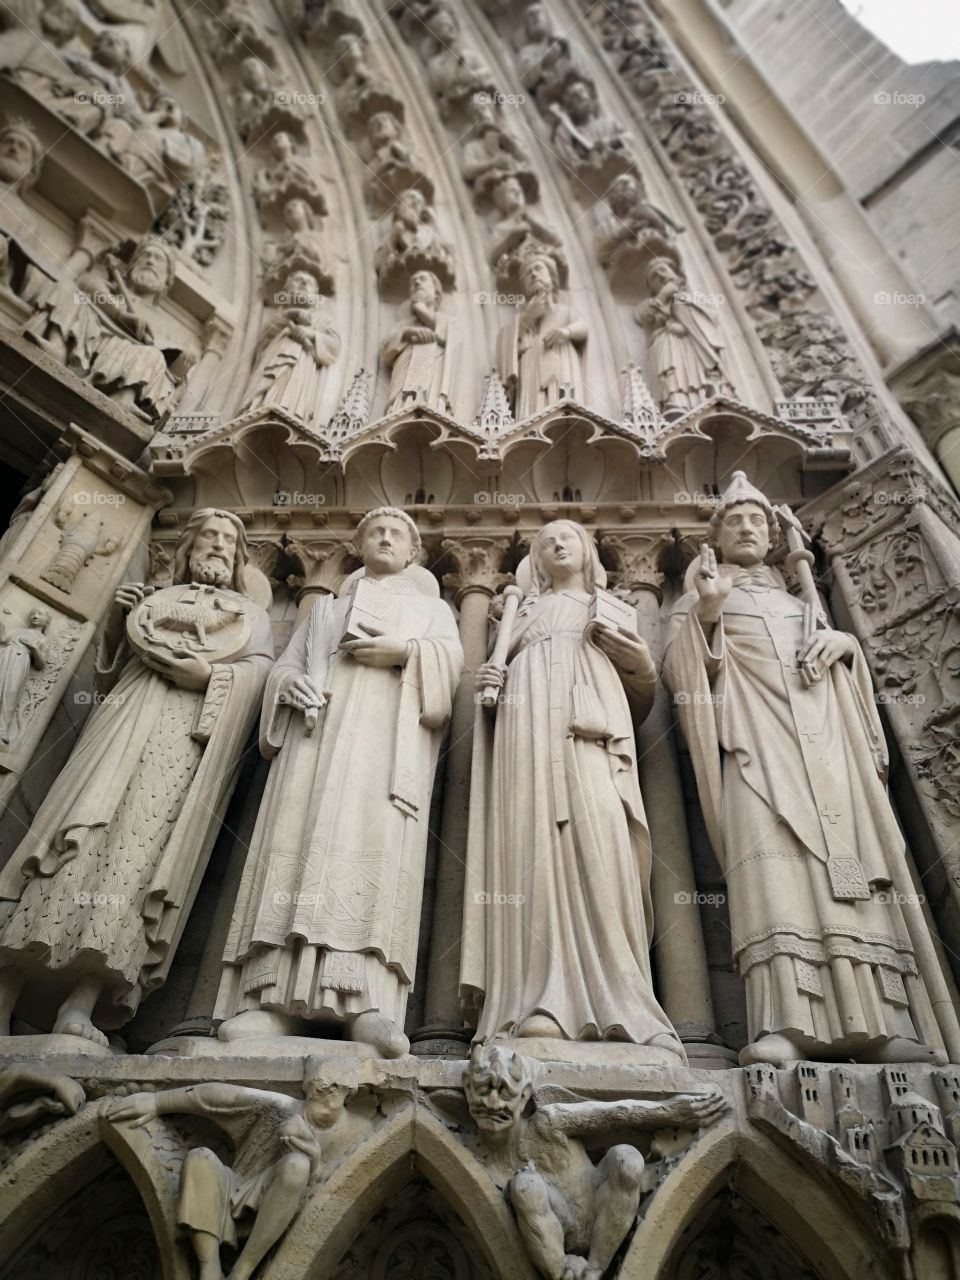 Facade of Notre Dame de paris before fire